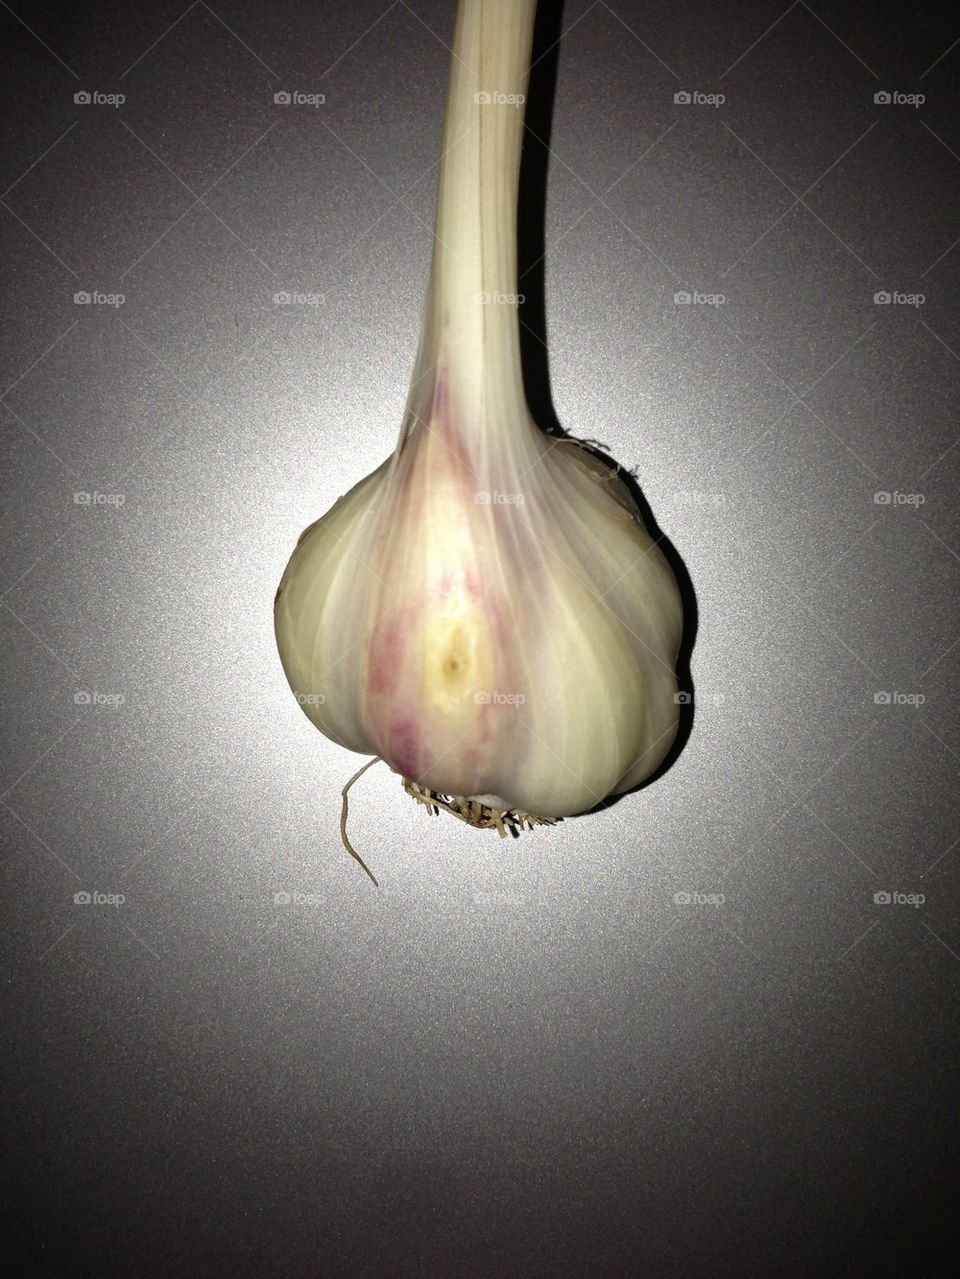 Garlic plant from the farm.